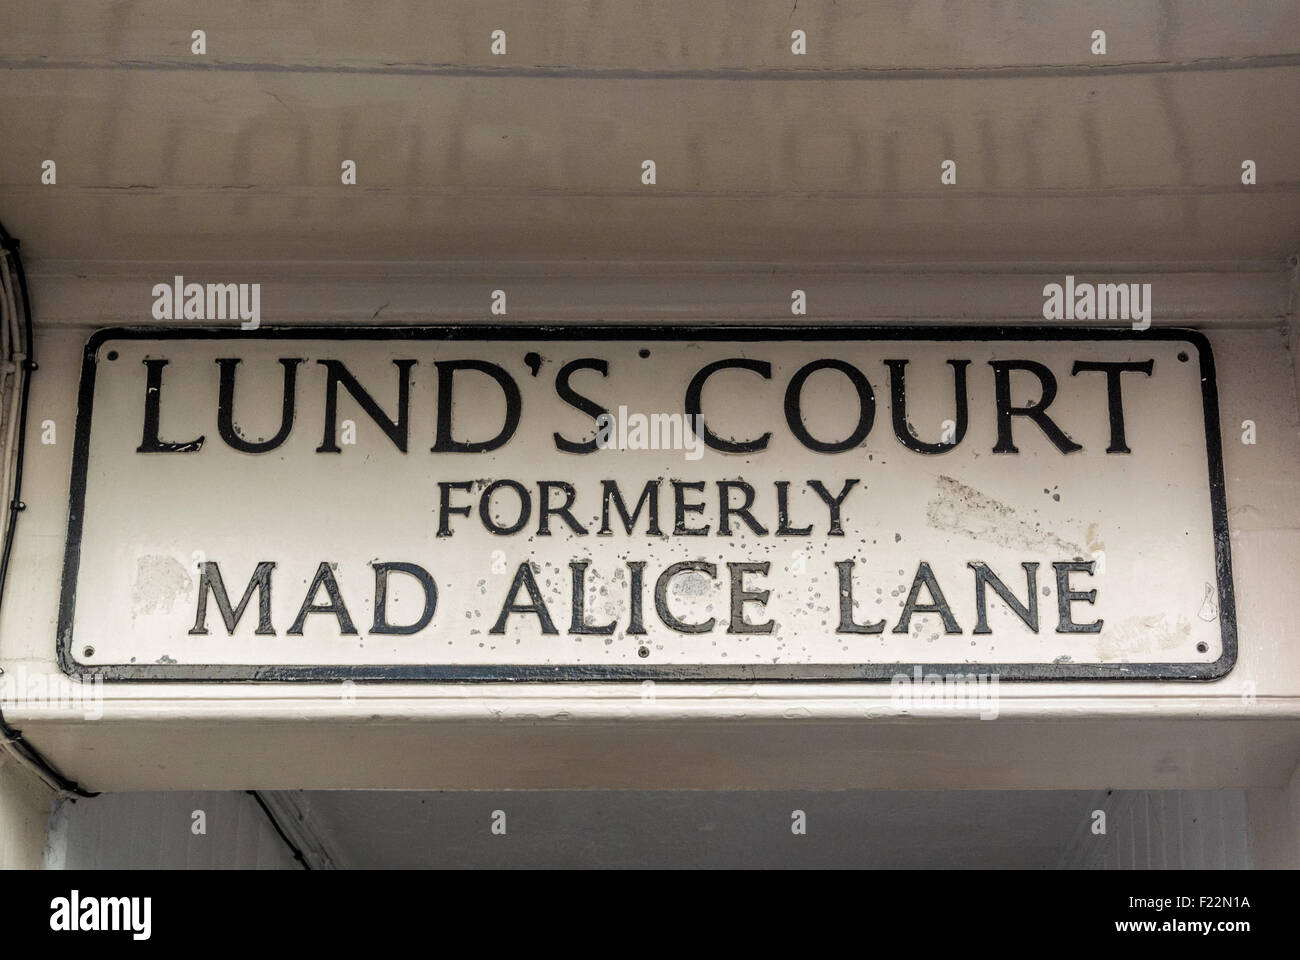 Lund's Court (formerly Mad Alice Lane)